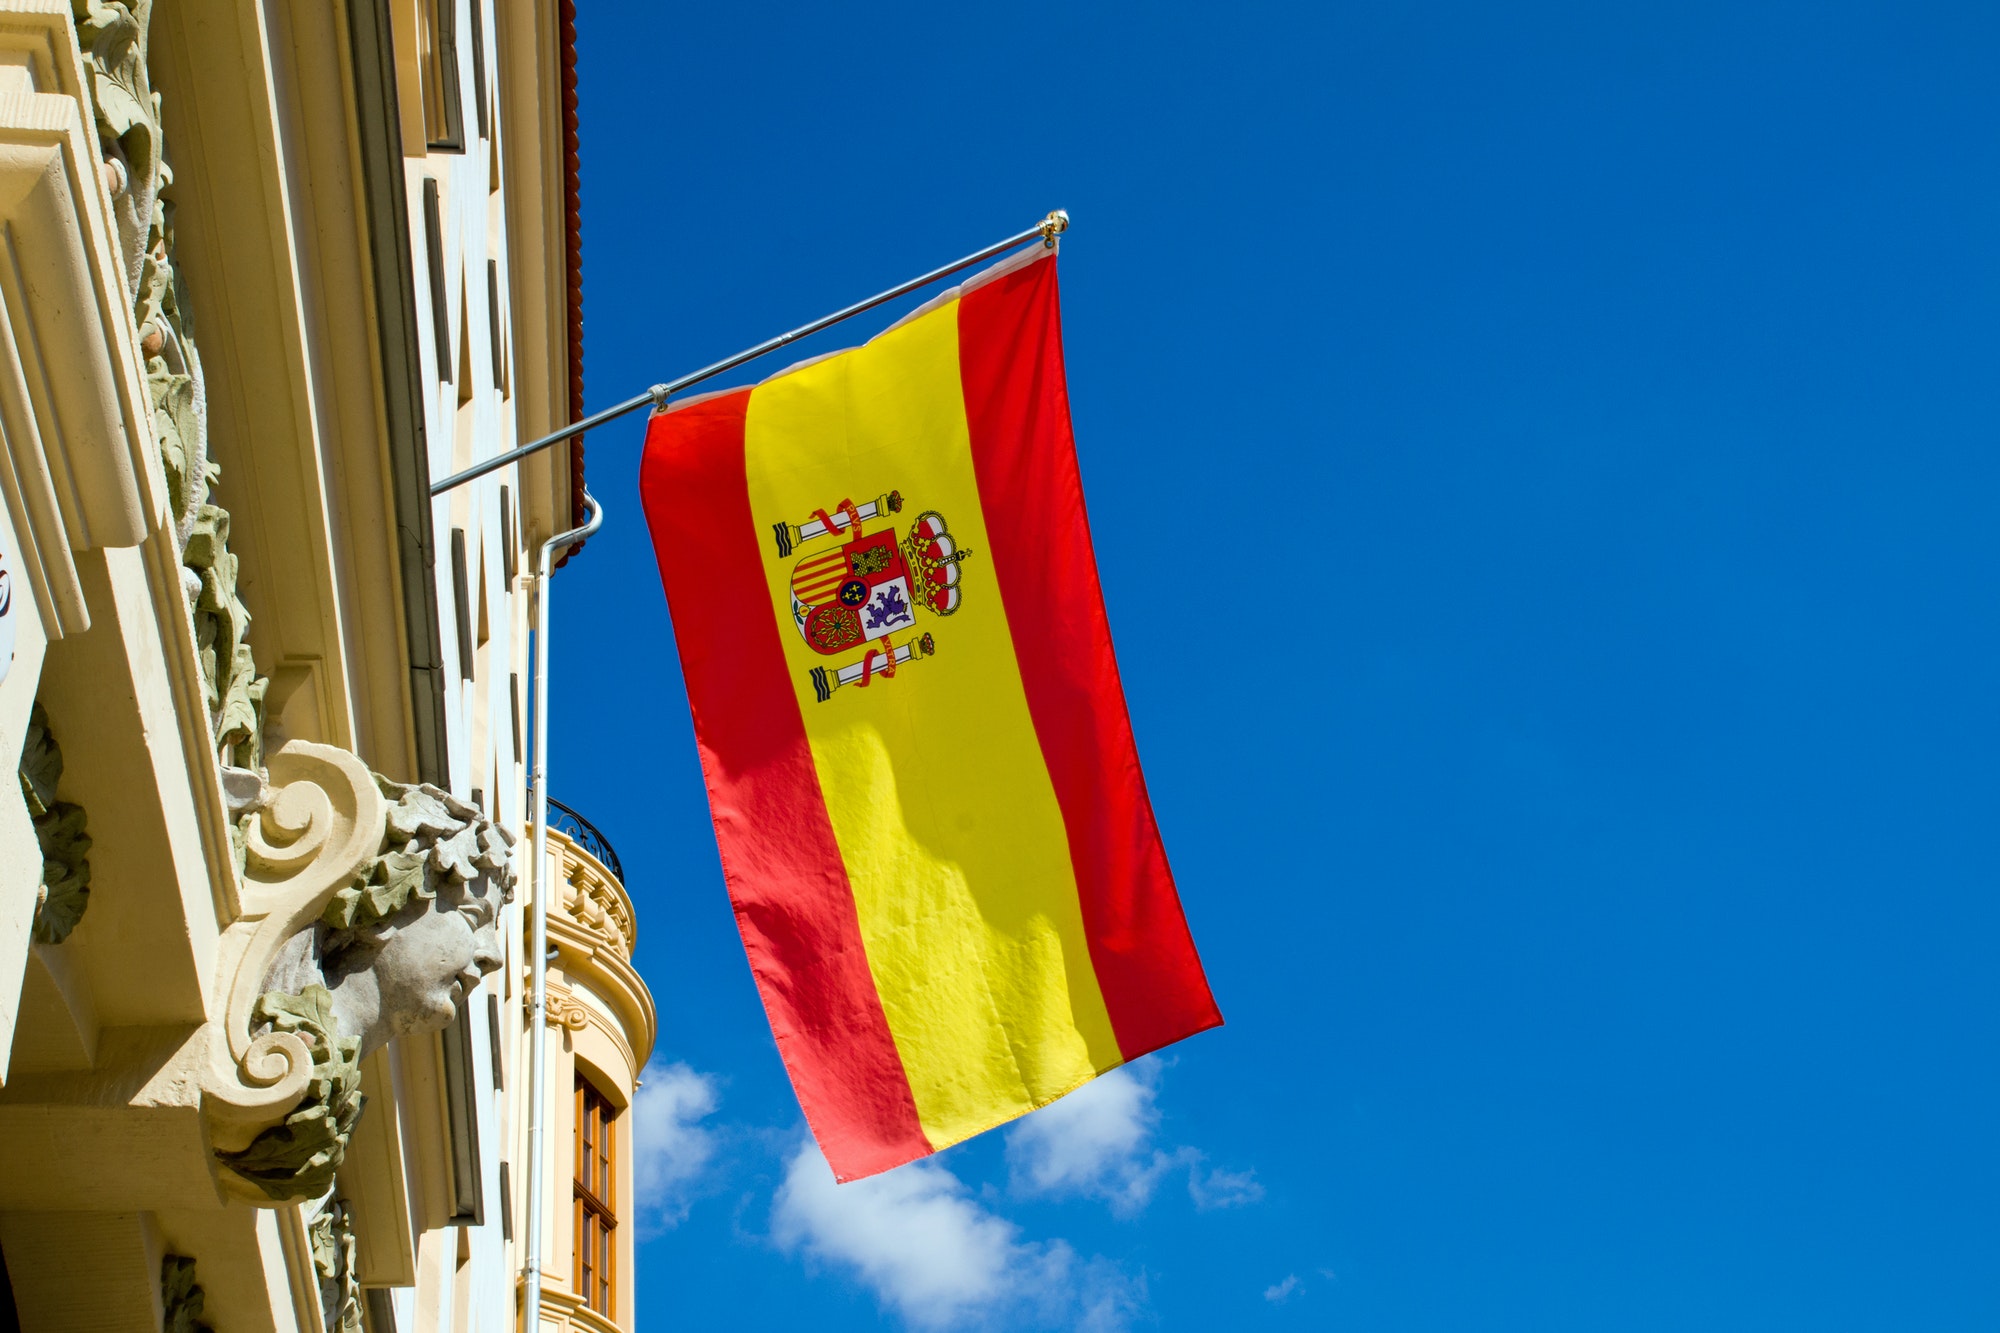 Property sales fell -17.7% across Spain